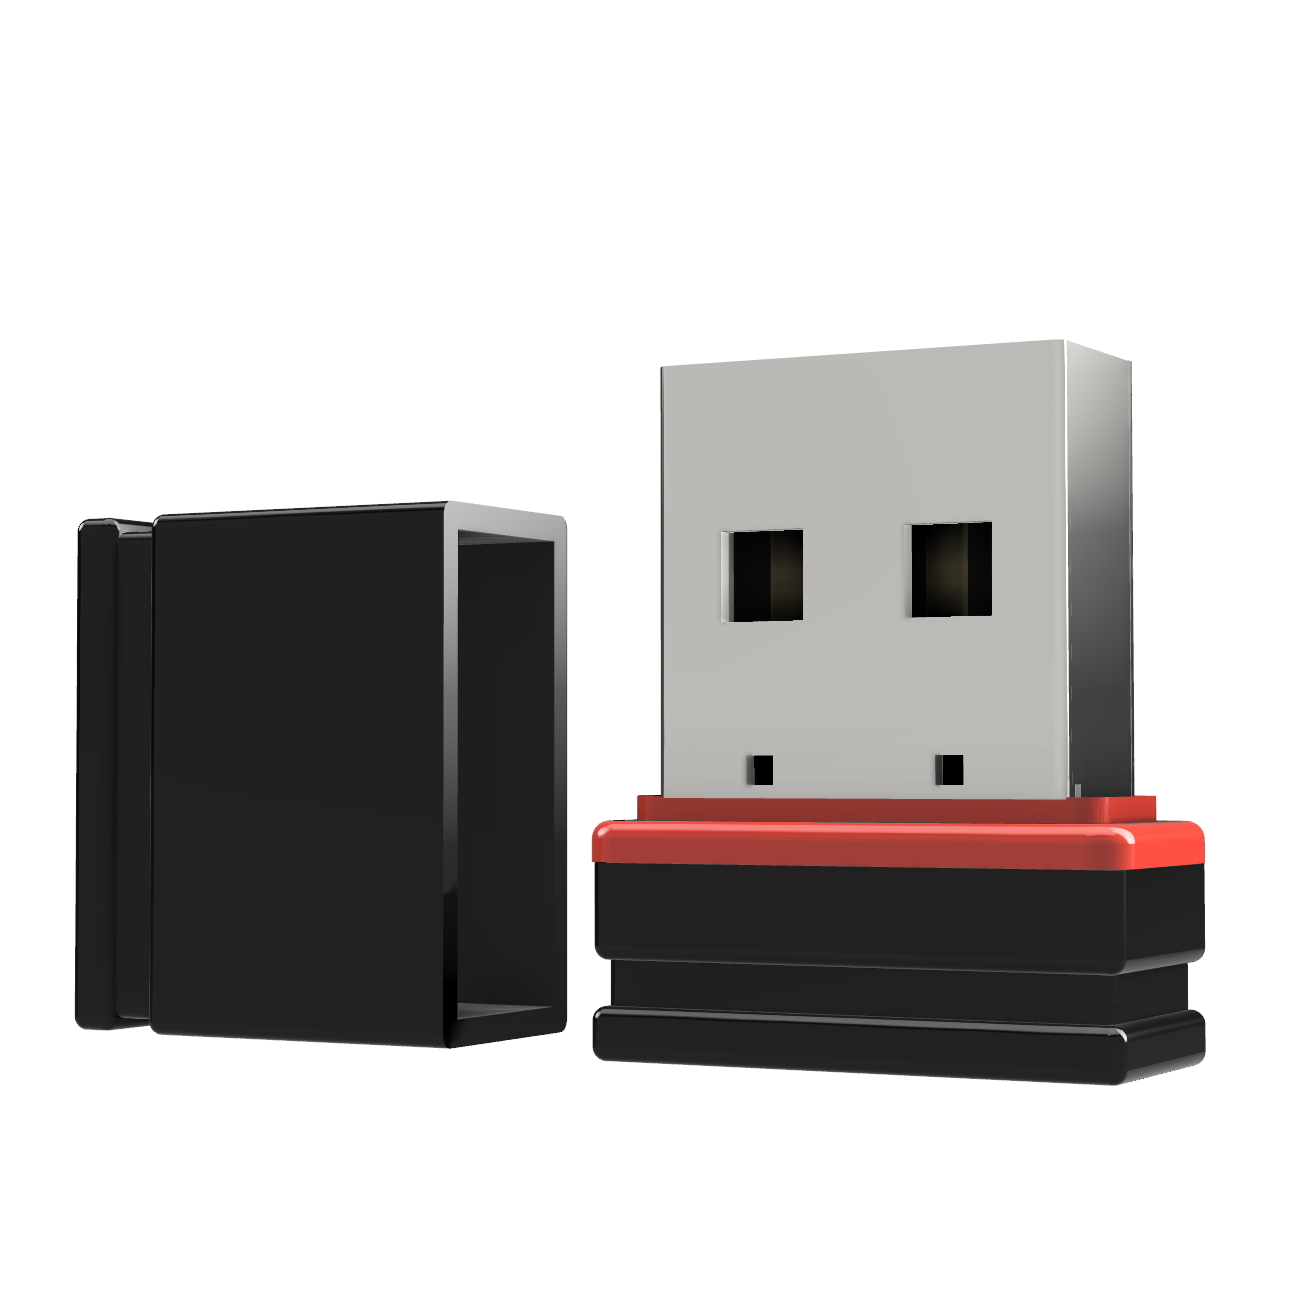 USB GERMANY ®ULTRA Mini P1 GB) USB-Stick (Schwarz/Rot, 2